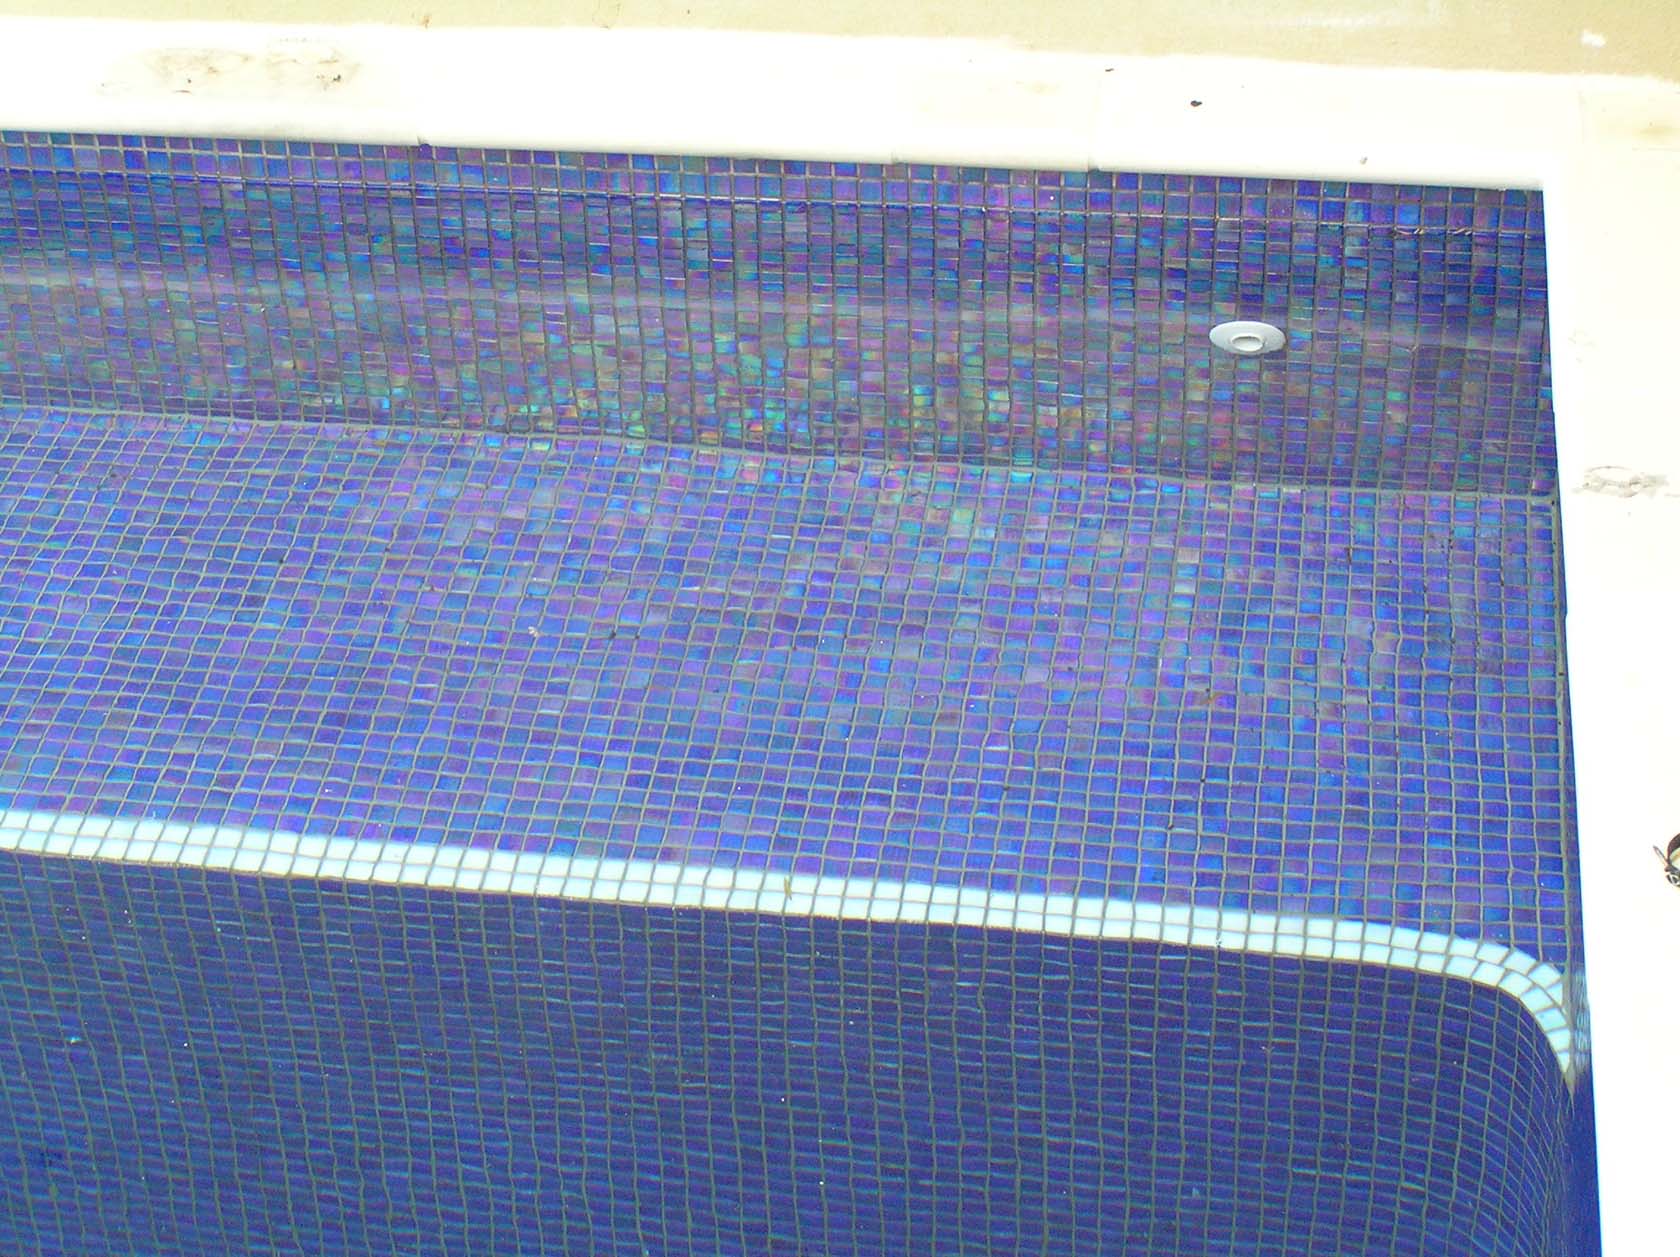 GC130 Dark Blue Pearl fully tiled pool